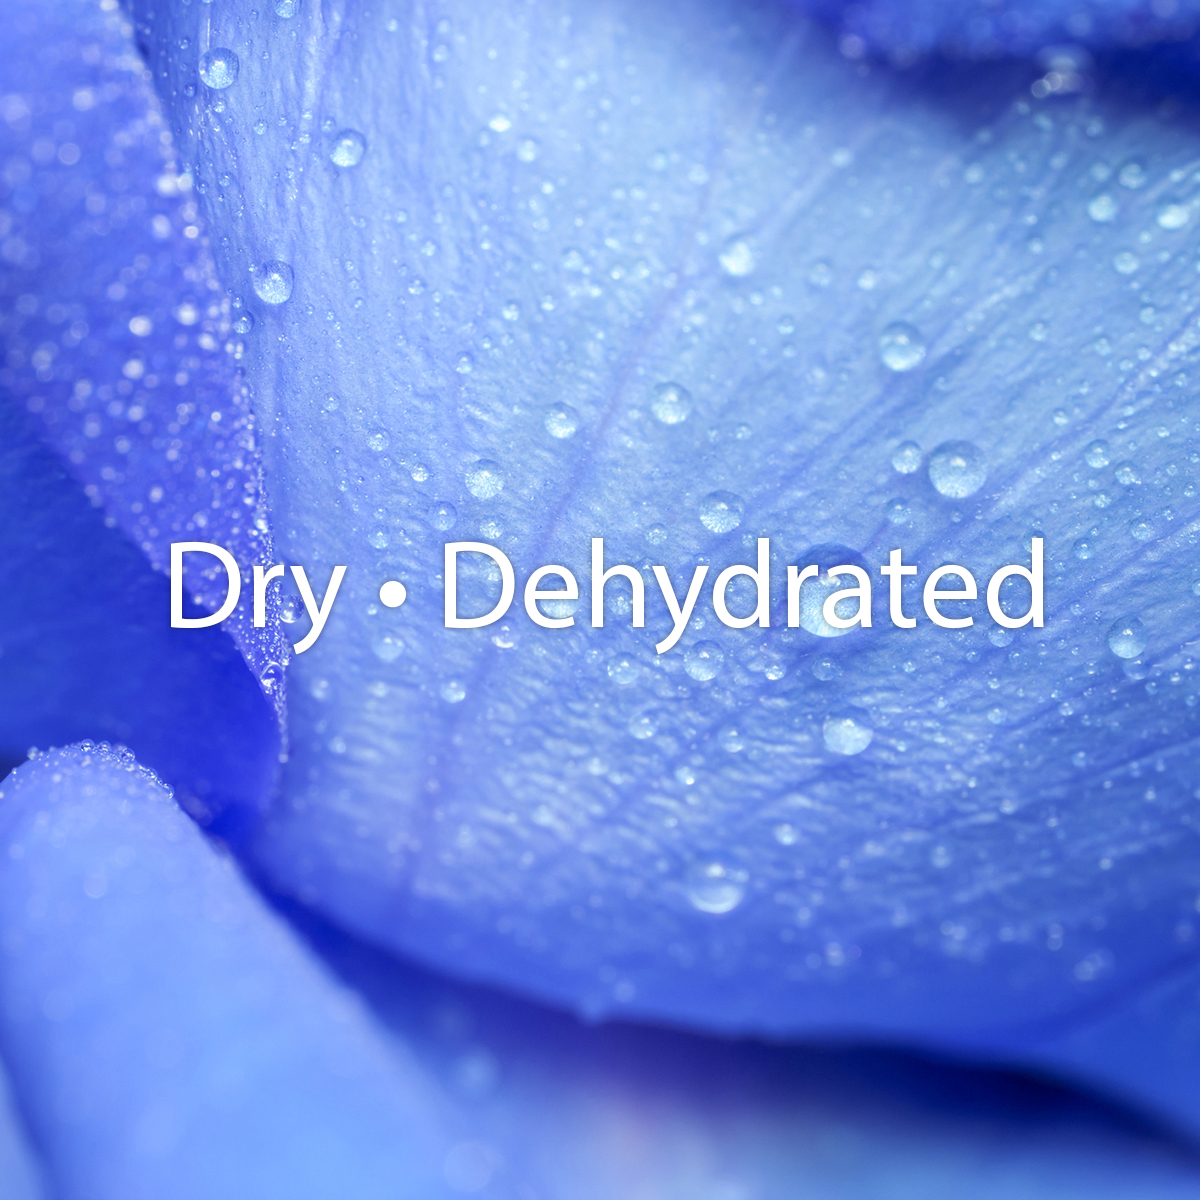 Dry_dehydrated.jpg